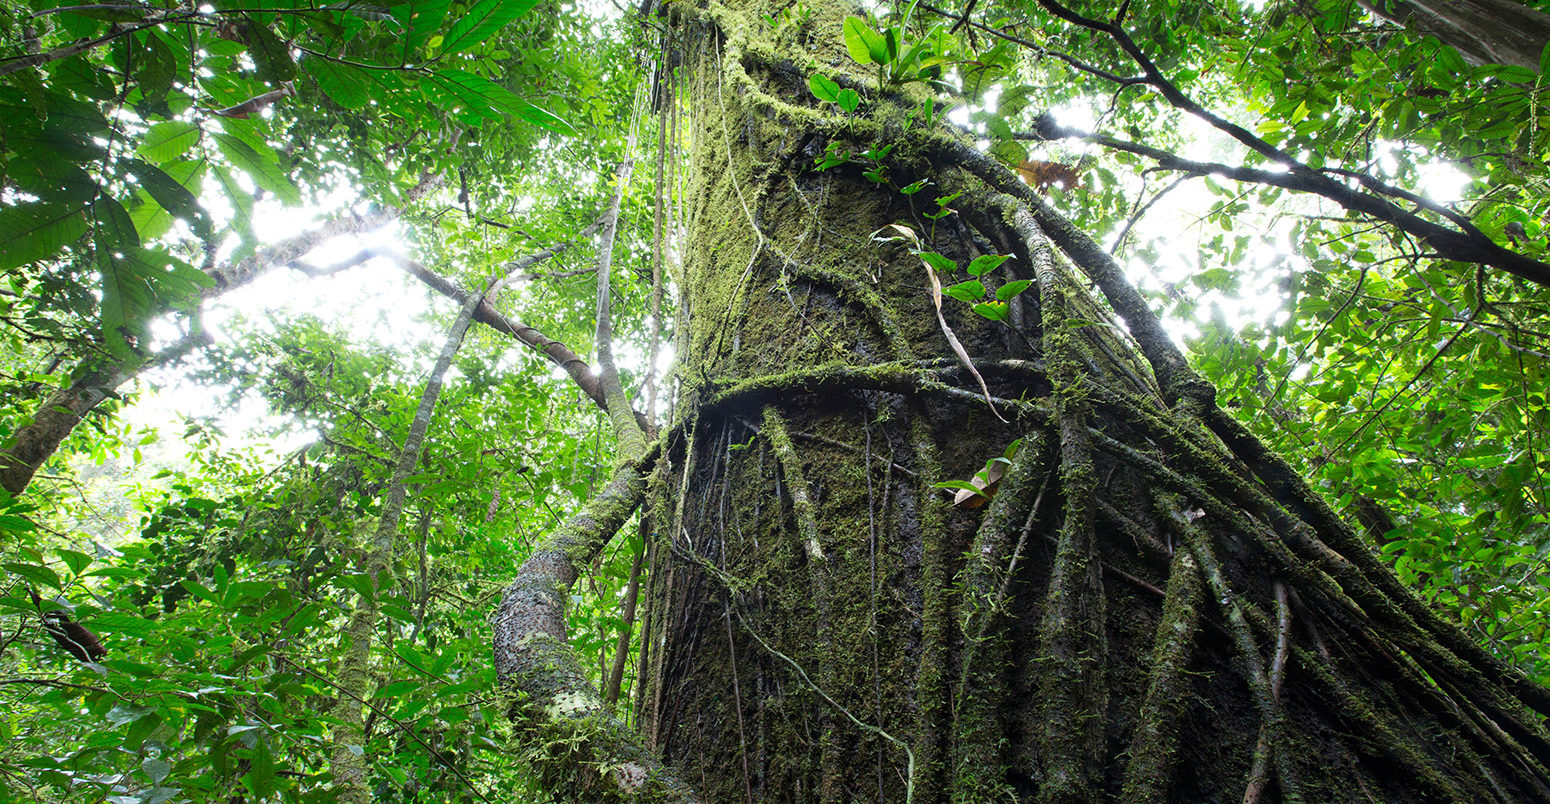 Undergrowth of tropical forest, Barro Colorado Island, Panama. Credit: Biosphoto / Alamy Stock Photo.